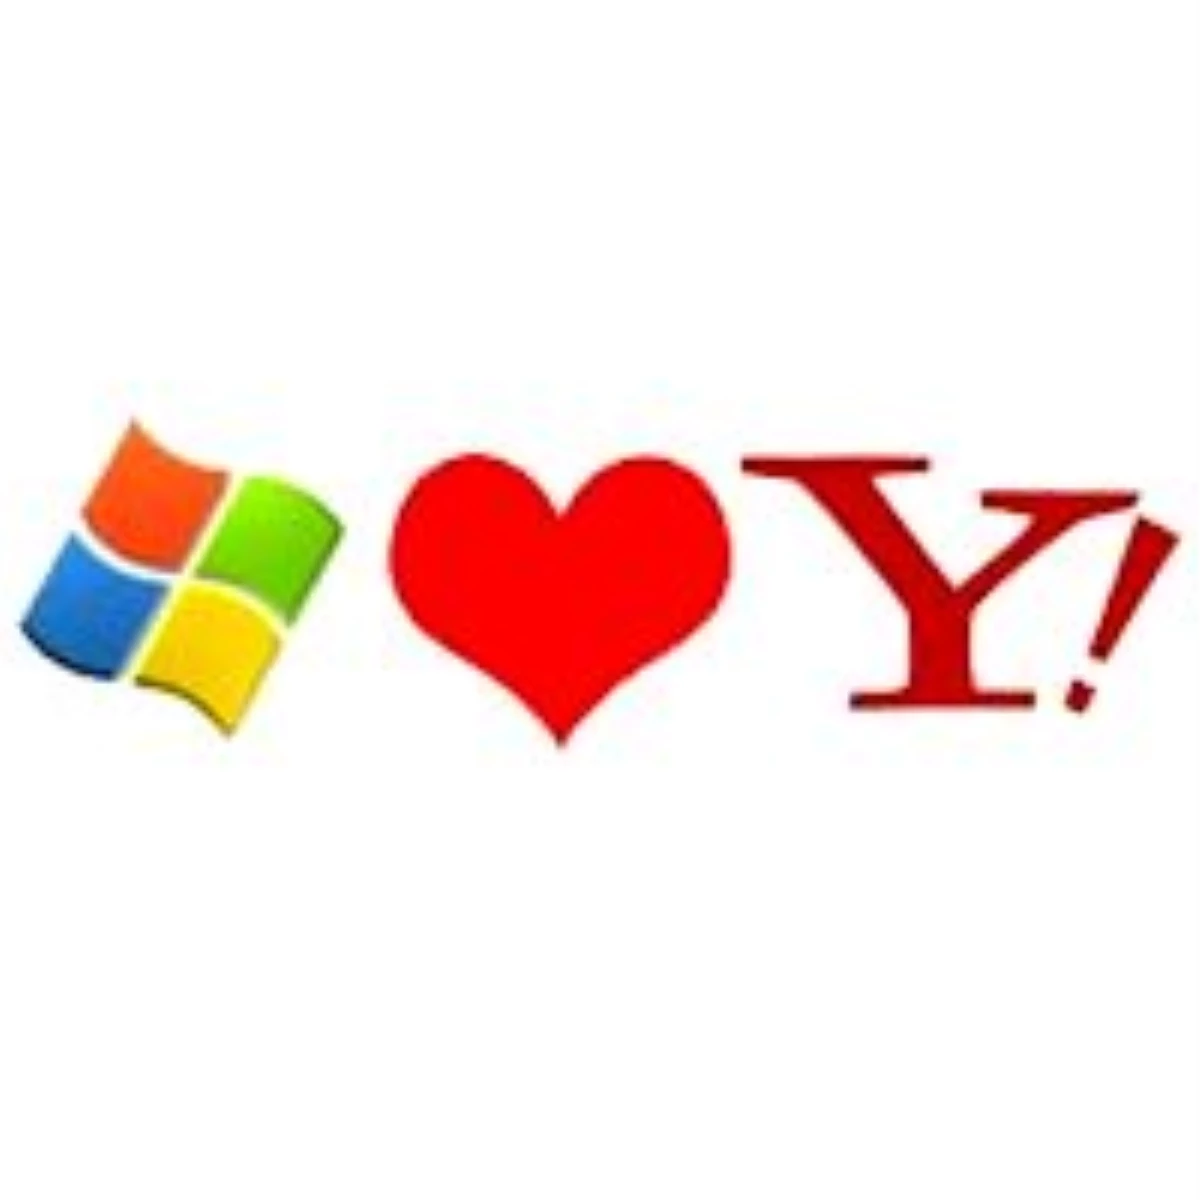 Microsoft: "Beceremedik, Mutluyuz!"